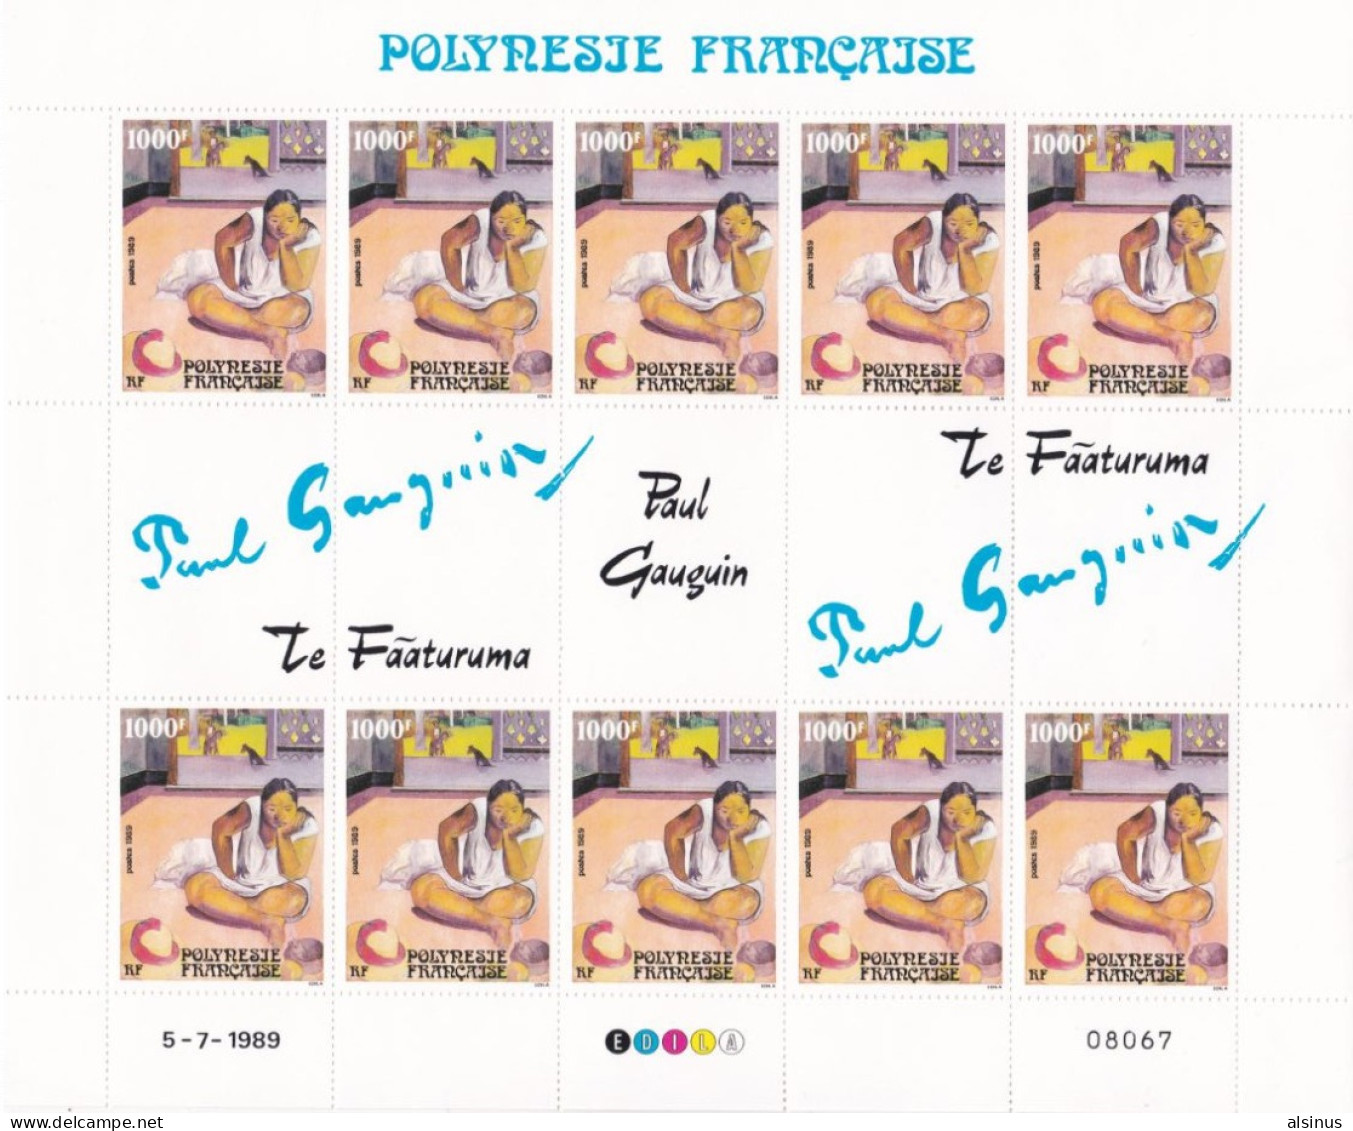 POLYNESIE FRANCAISE - 1989 - N° 346 MULTICOLORE - 1000 F -  PAUL GAUGUIN - PLANCHE COMPLETE DE 10 TIMBRES - ETAT NEUF - Ongebruikt